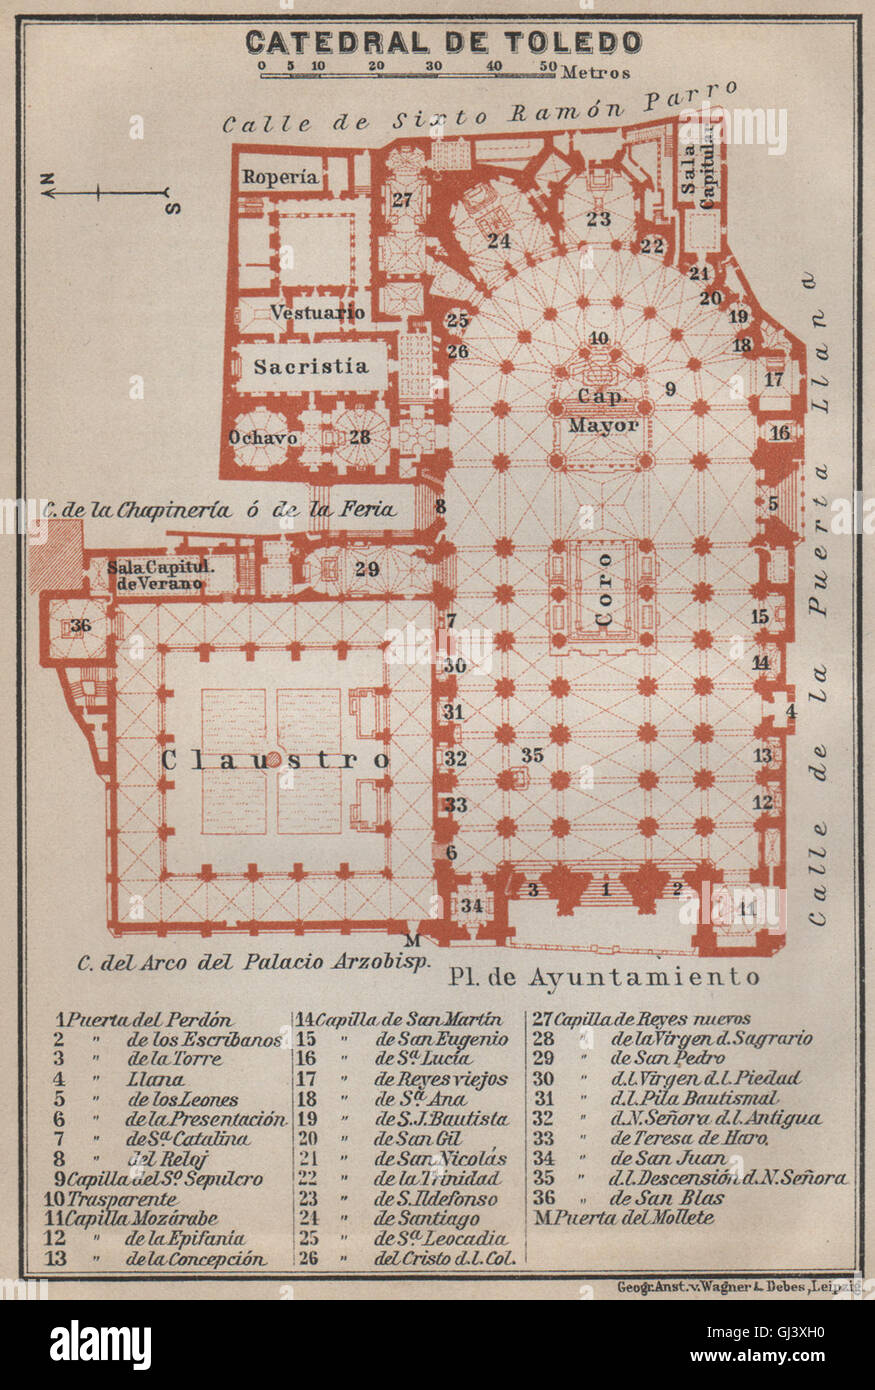 CATHEDRAL OF / CATEDRAL DE TOLEDO floor plan. Spain España mapa, 1913 Stock Photo